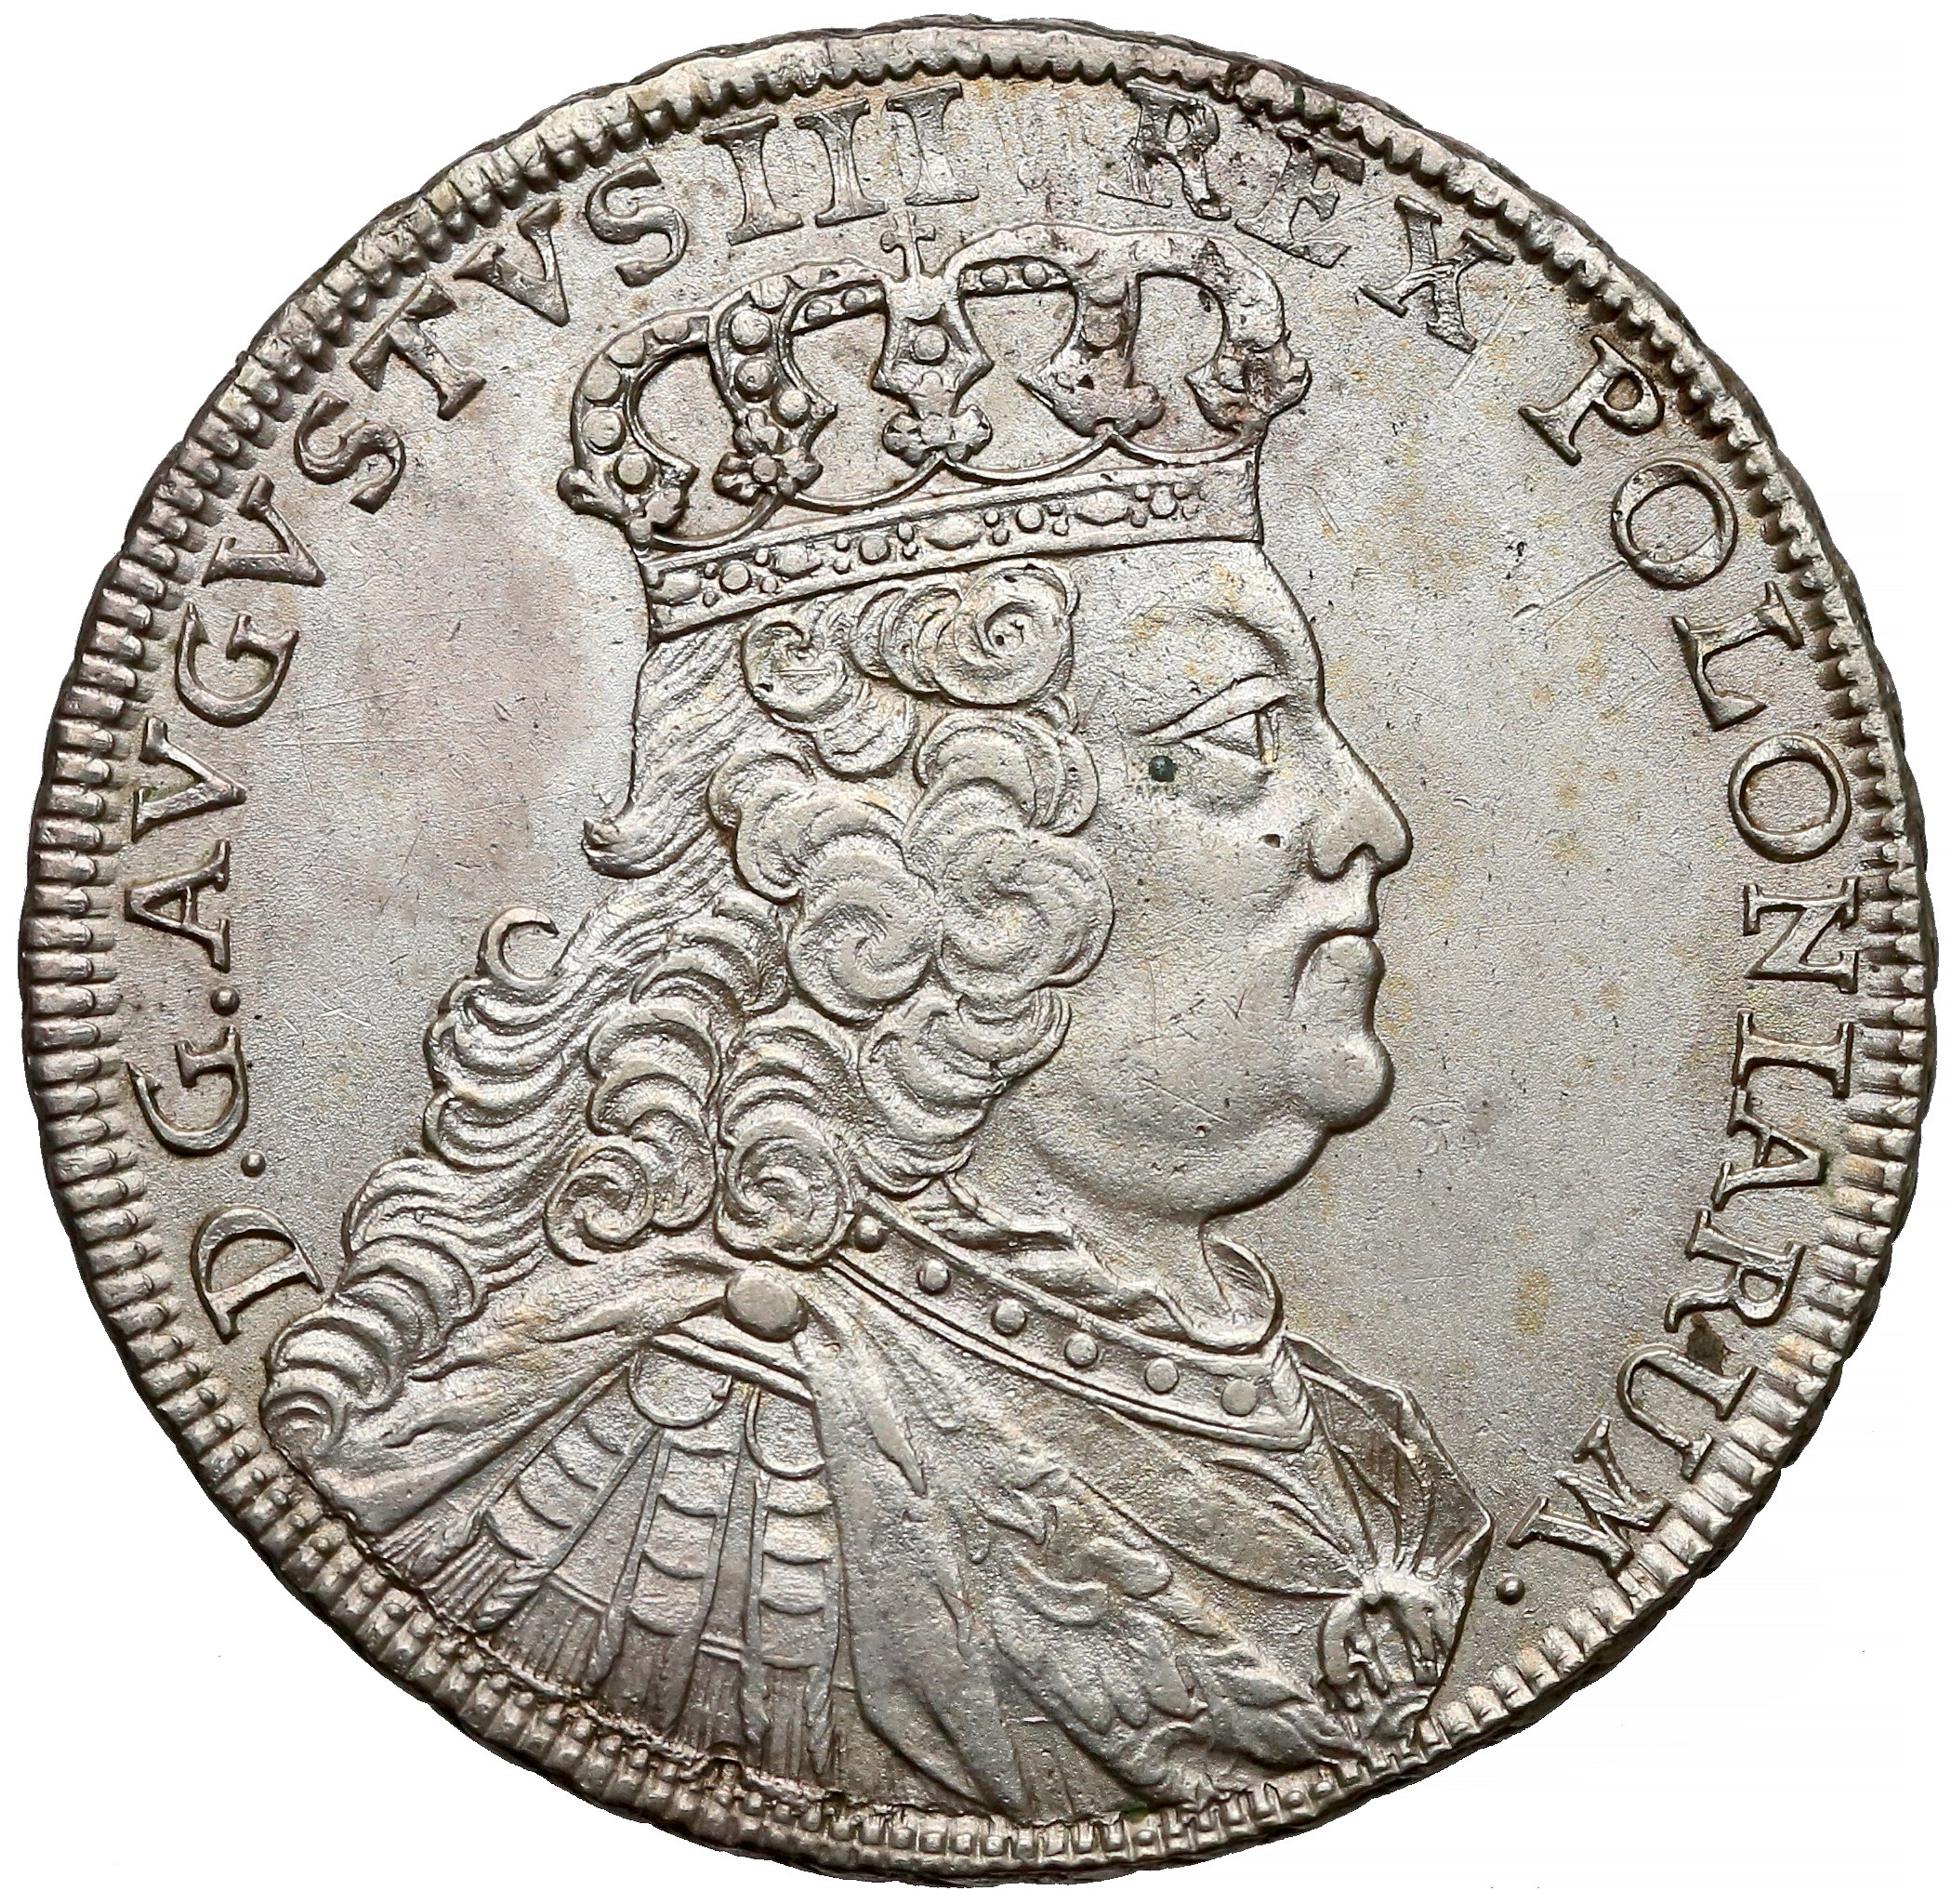 Монета речь посполита. 1754 Монета речи Посполитой. Август 3 Король речи Посполитой. Монета Шестак 1754. Монеты речи Посполитой.